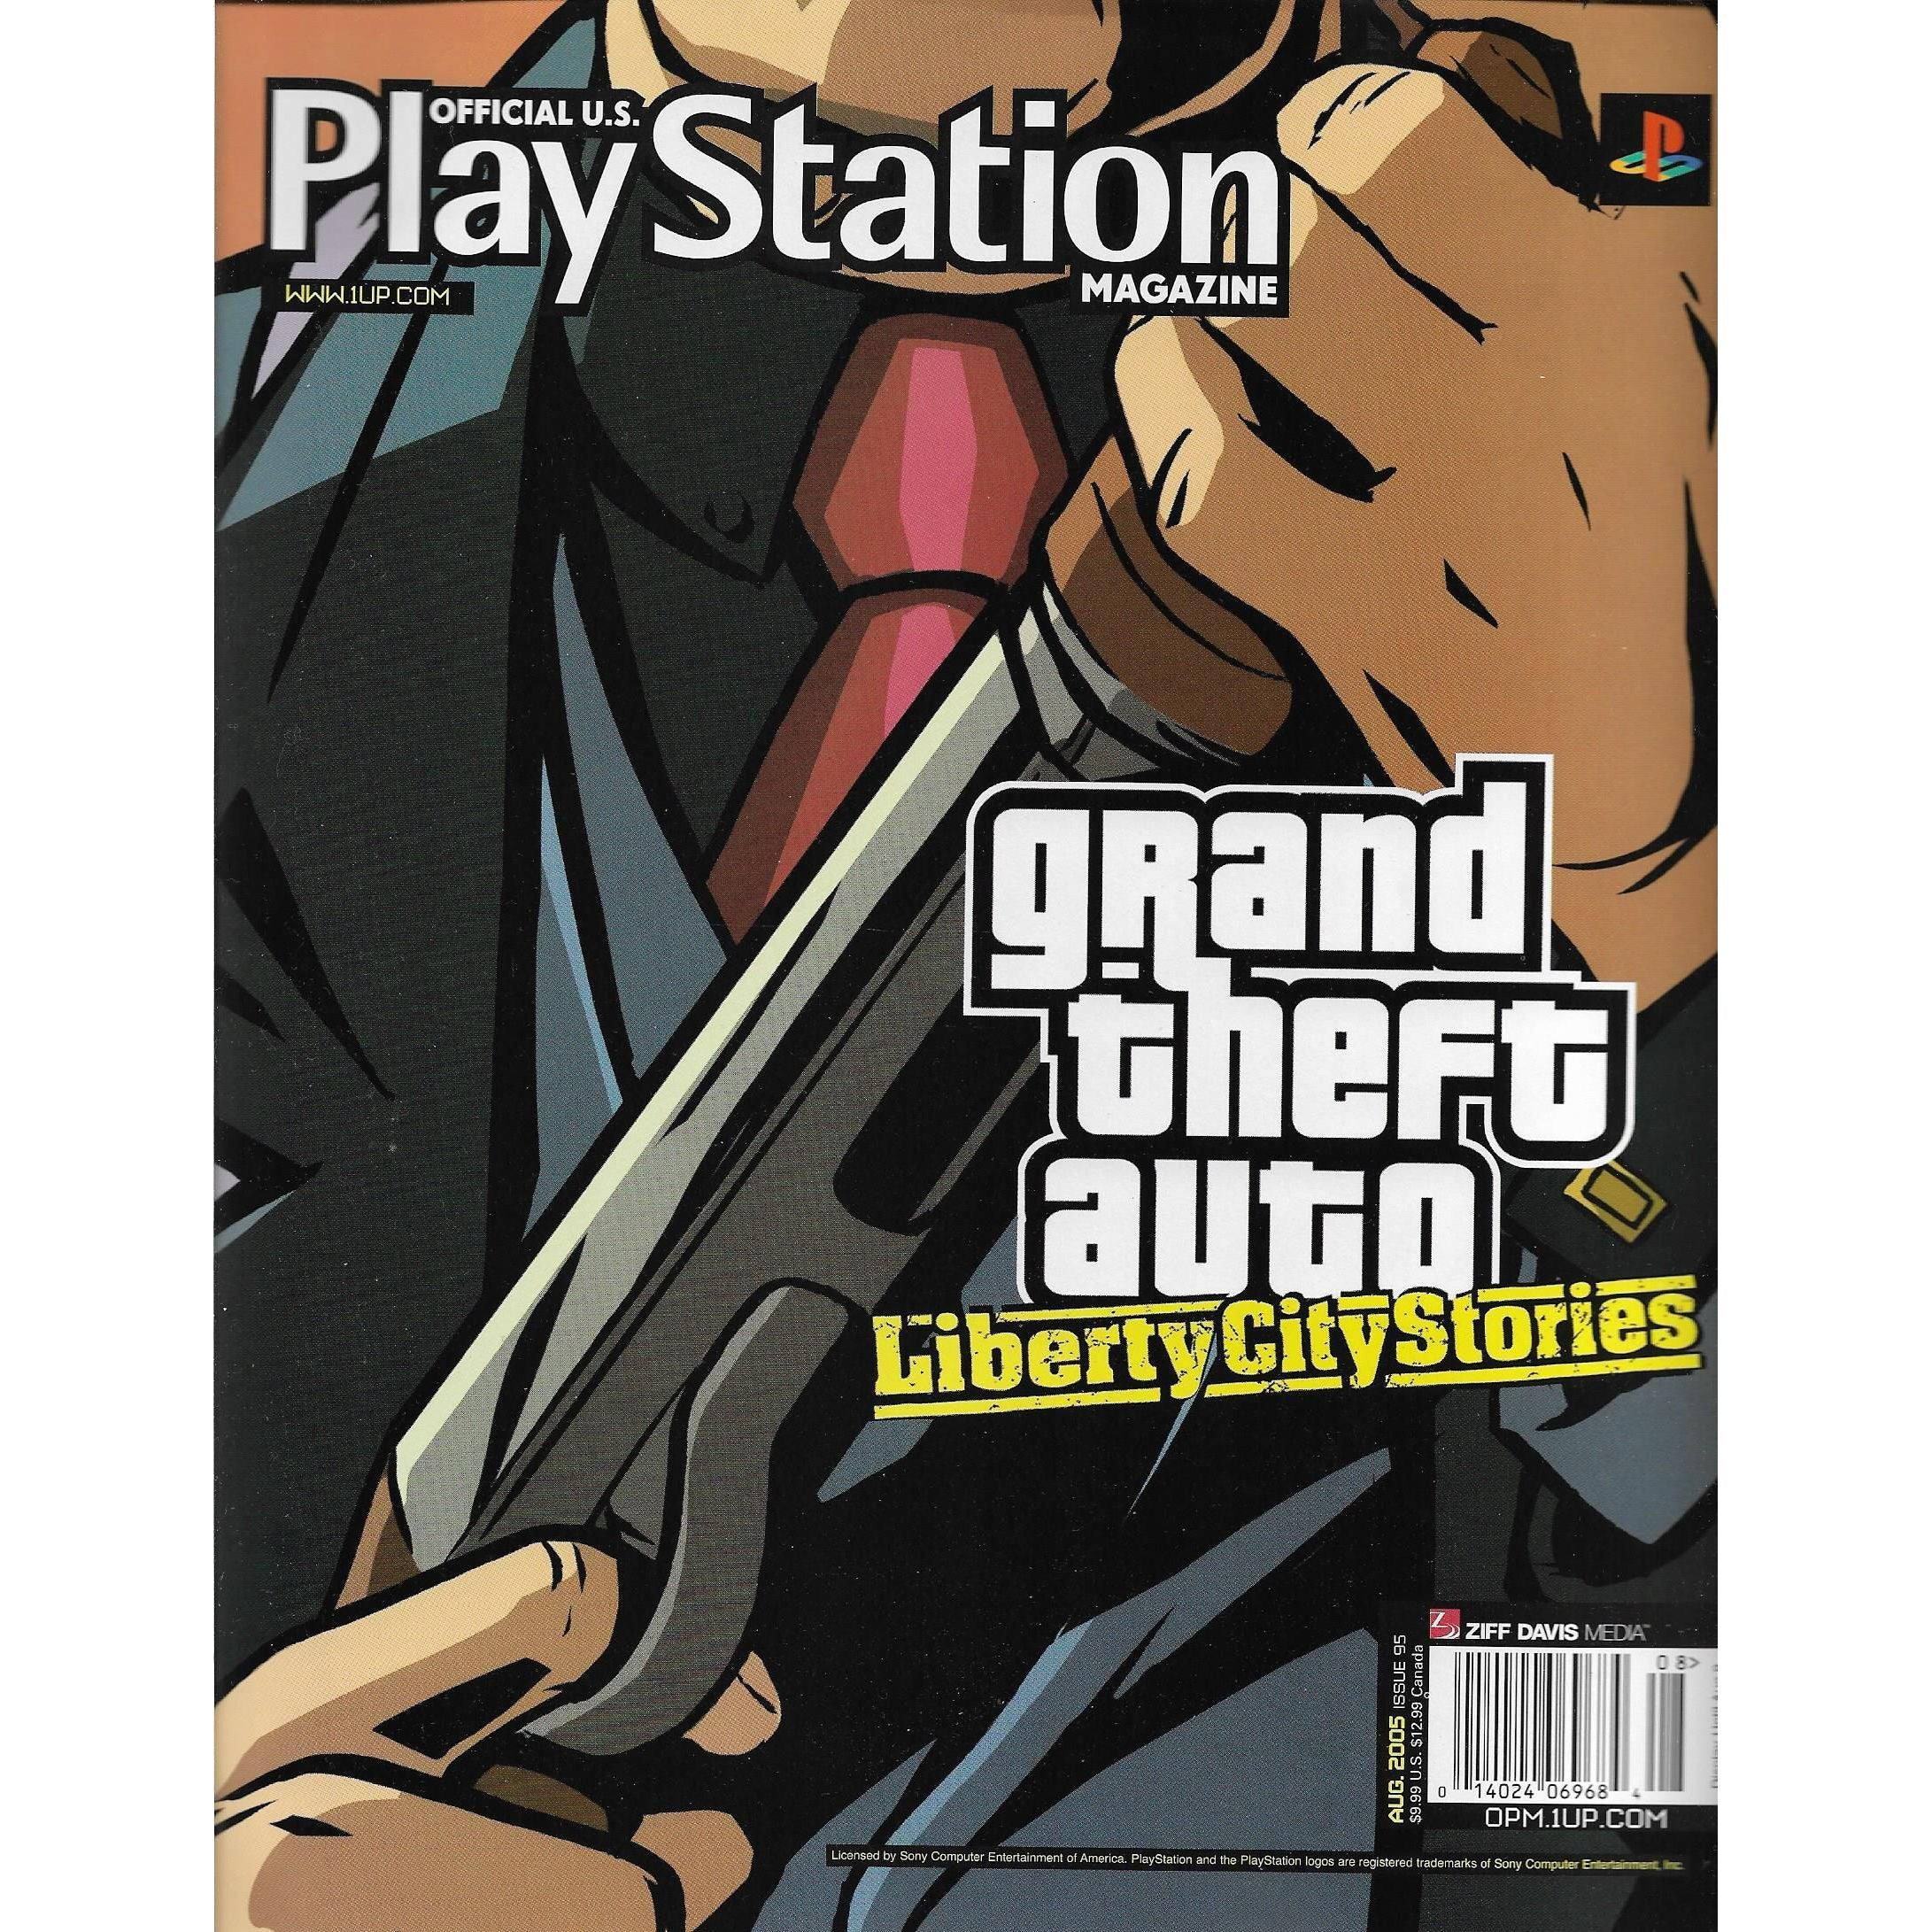 Magazine PlayStation officiel - Grand Theft Auto Liberty City Stories - Août 2005, numéro 95